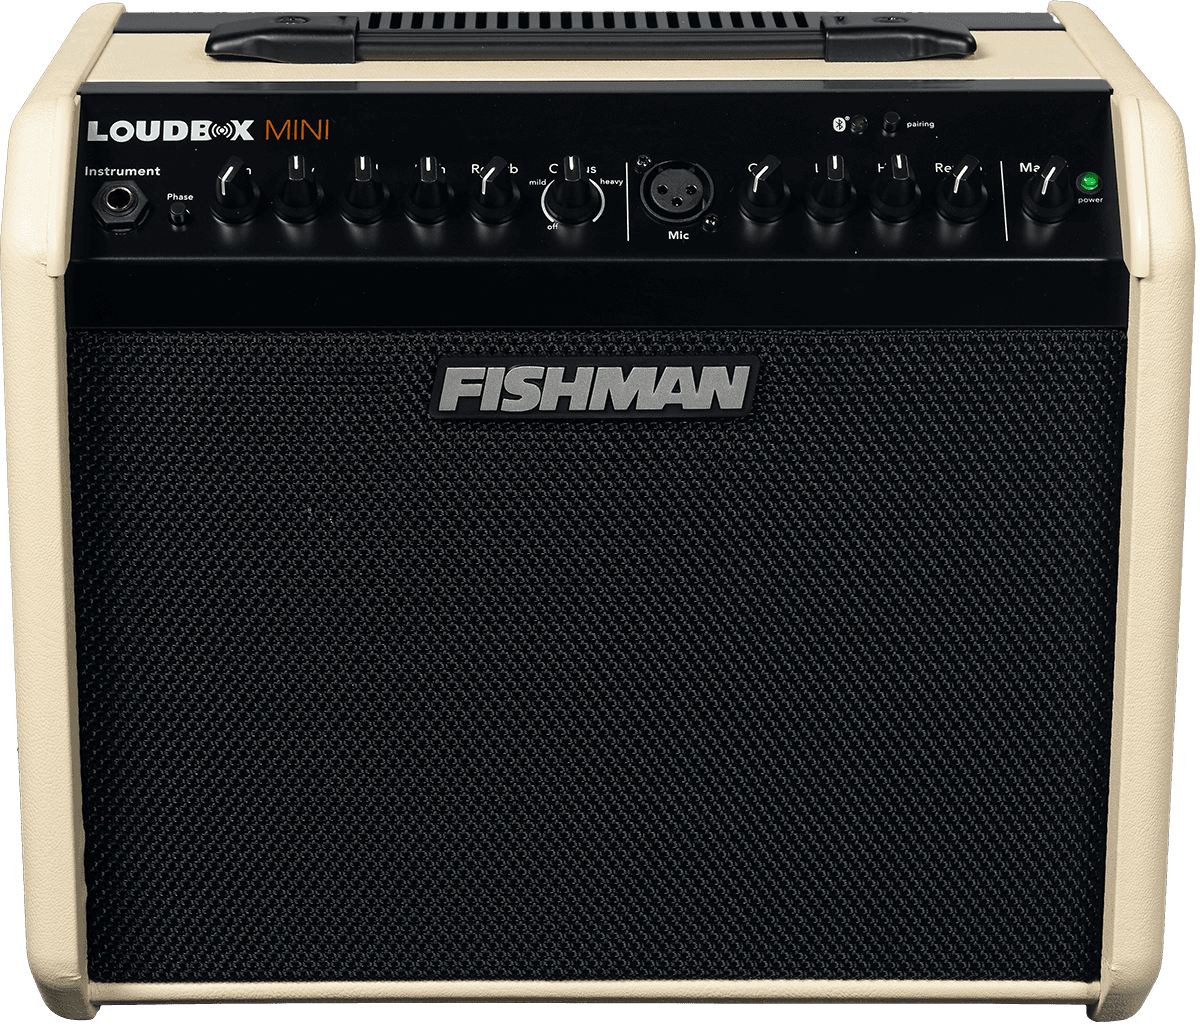 Fishman Loudbox Mini 60w Bluetooth - Cream - Mini acoustic guitar amp - Variation 2